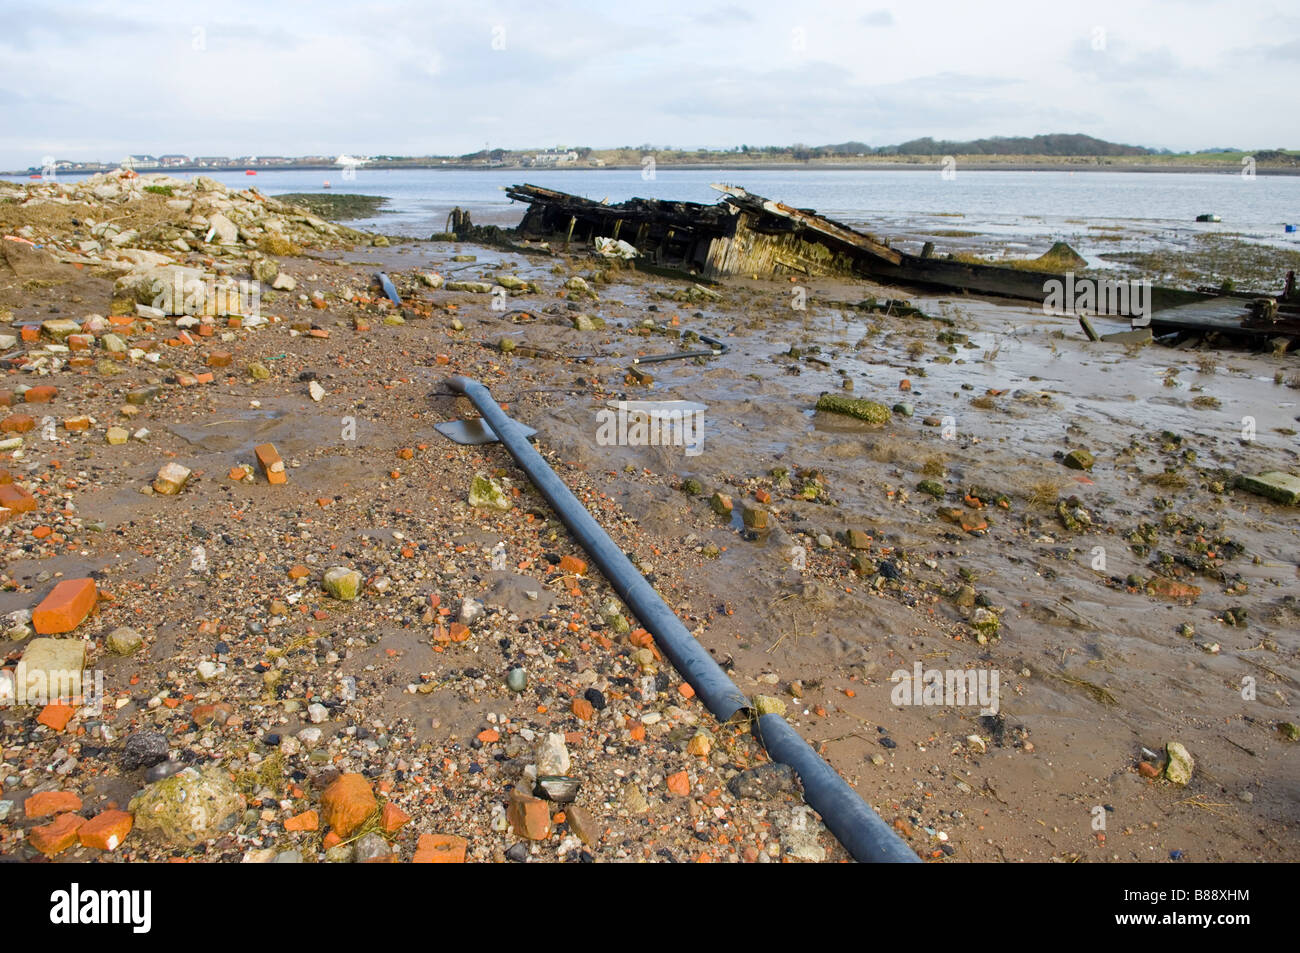 Rubbish on beach Stock Photo